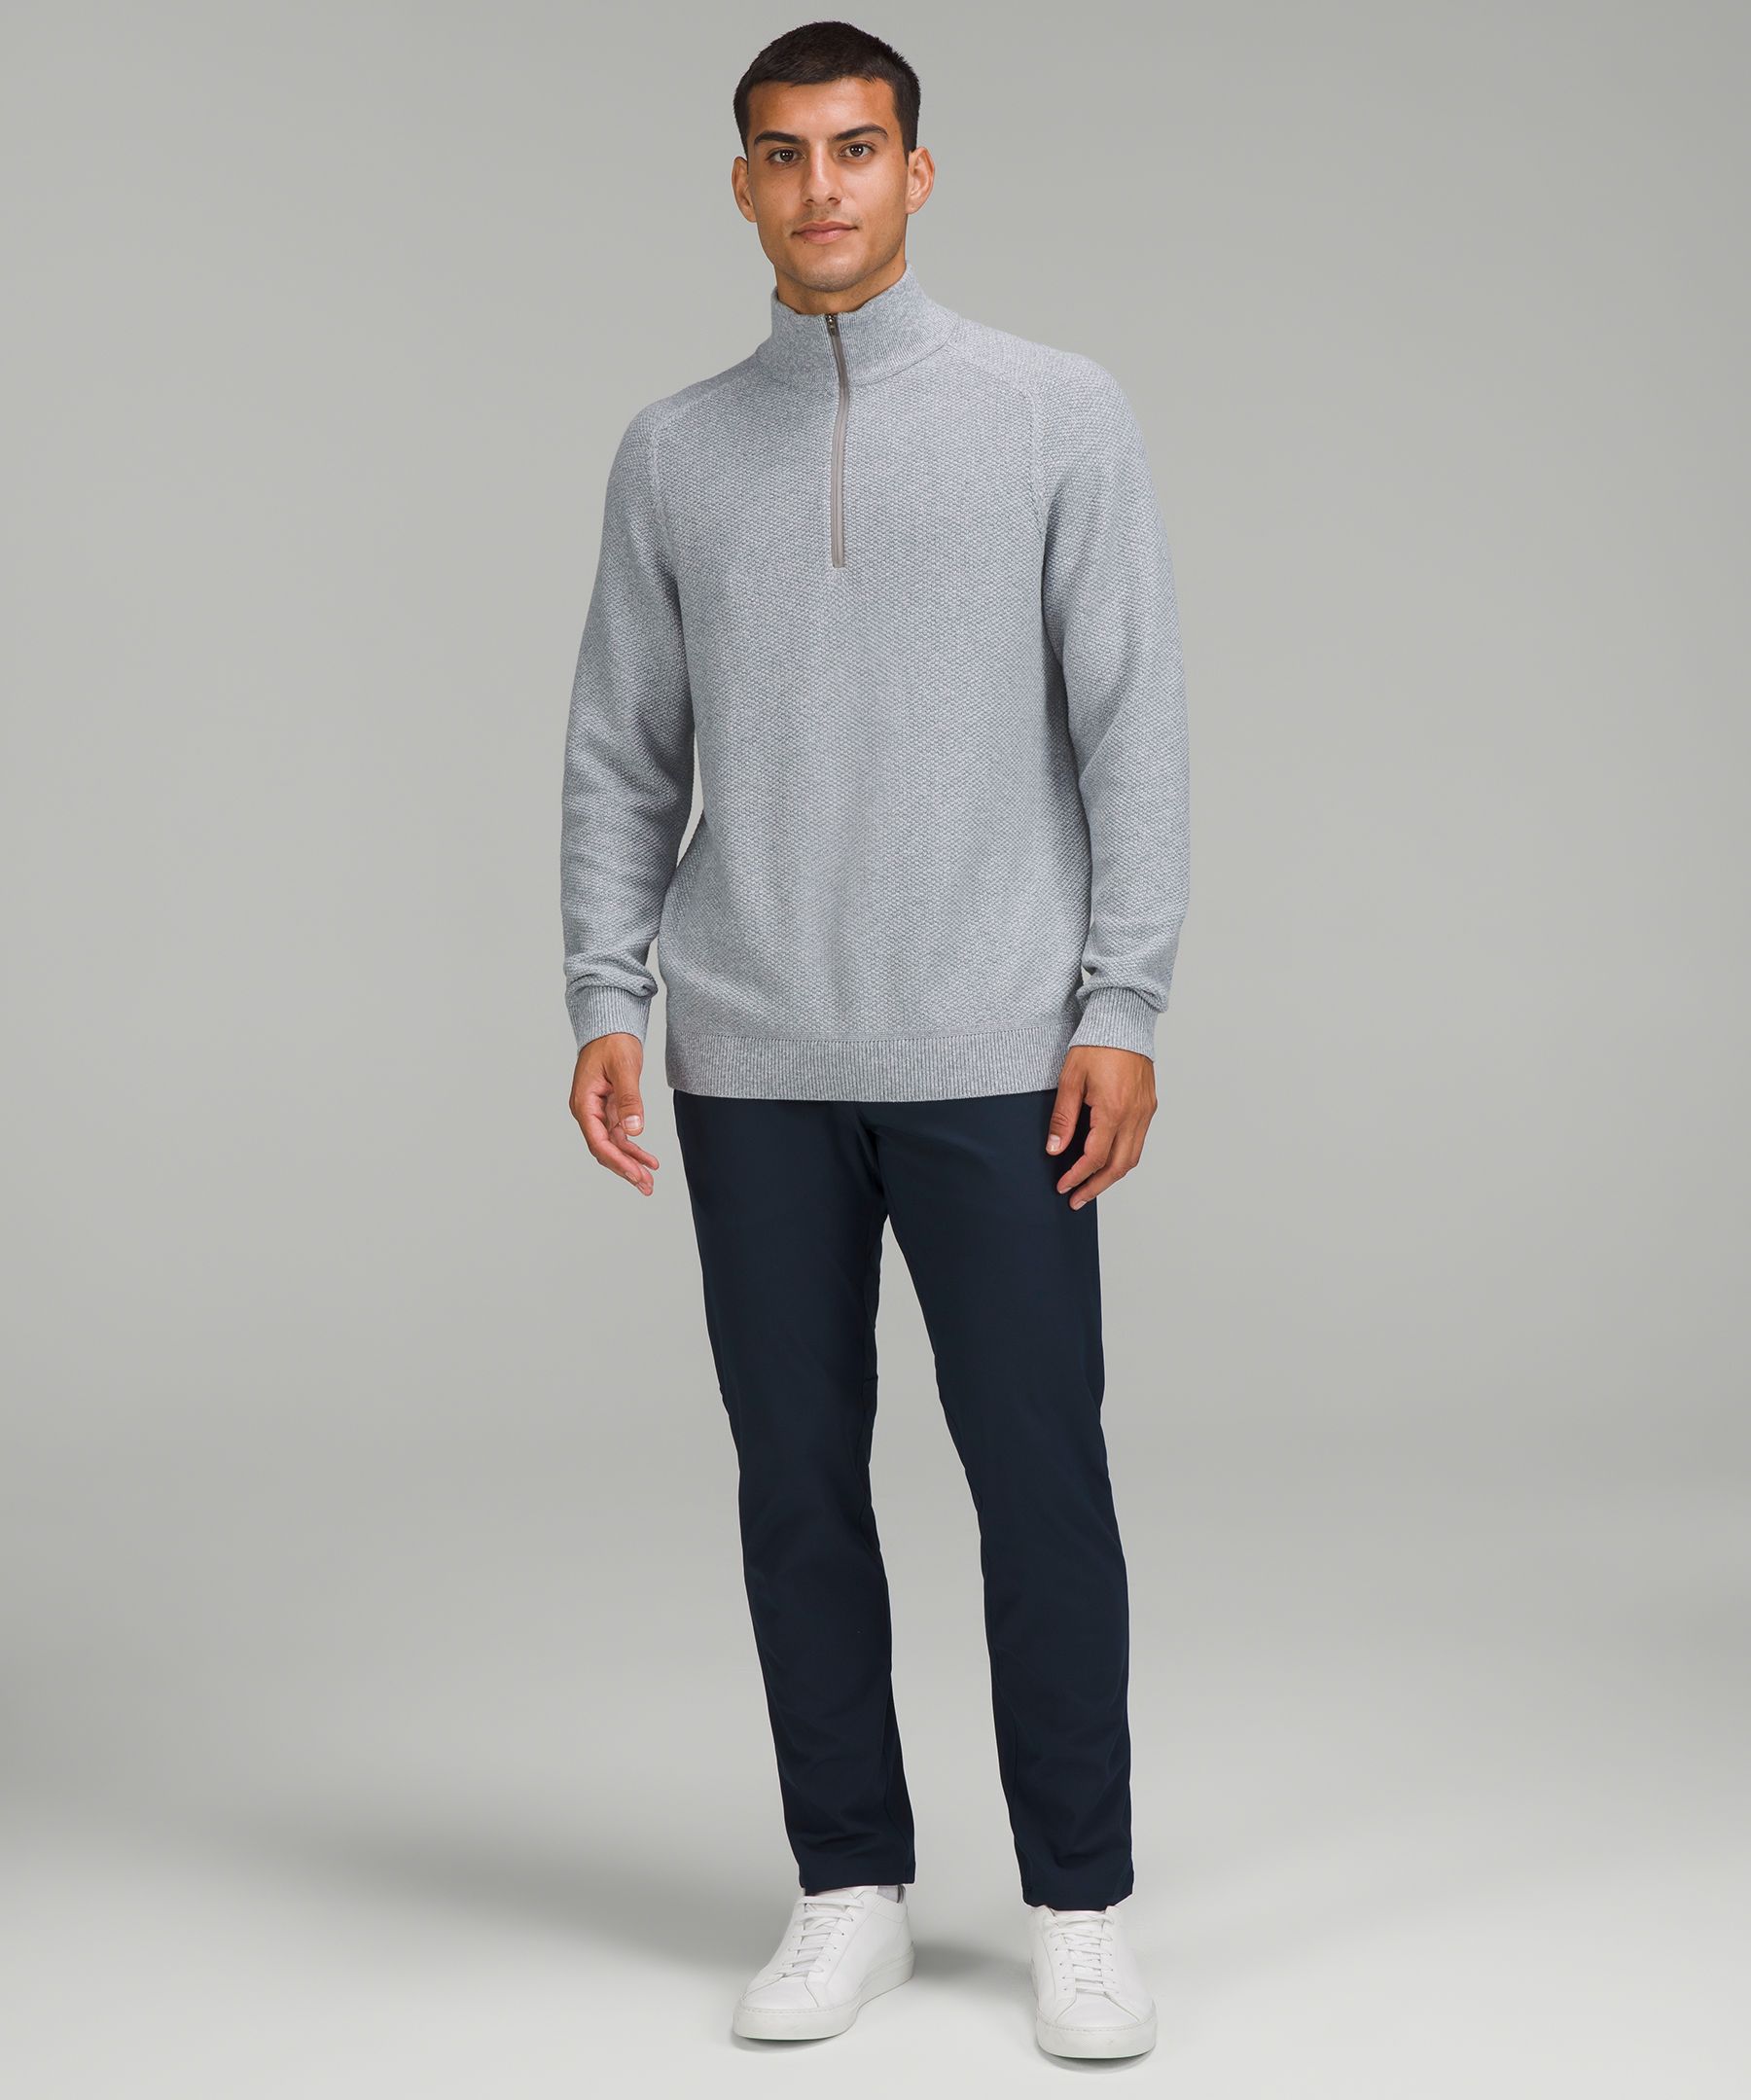 Casa Moda - Half Zip Textured Knit Sweater - 100% Cotton - 413710500 - 